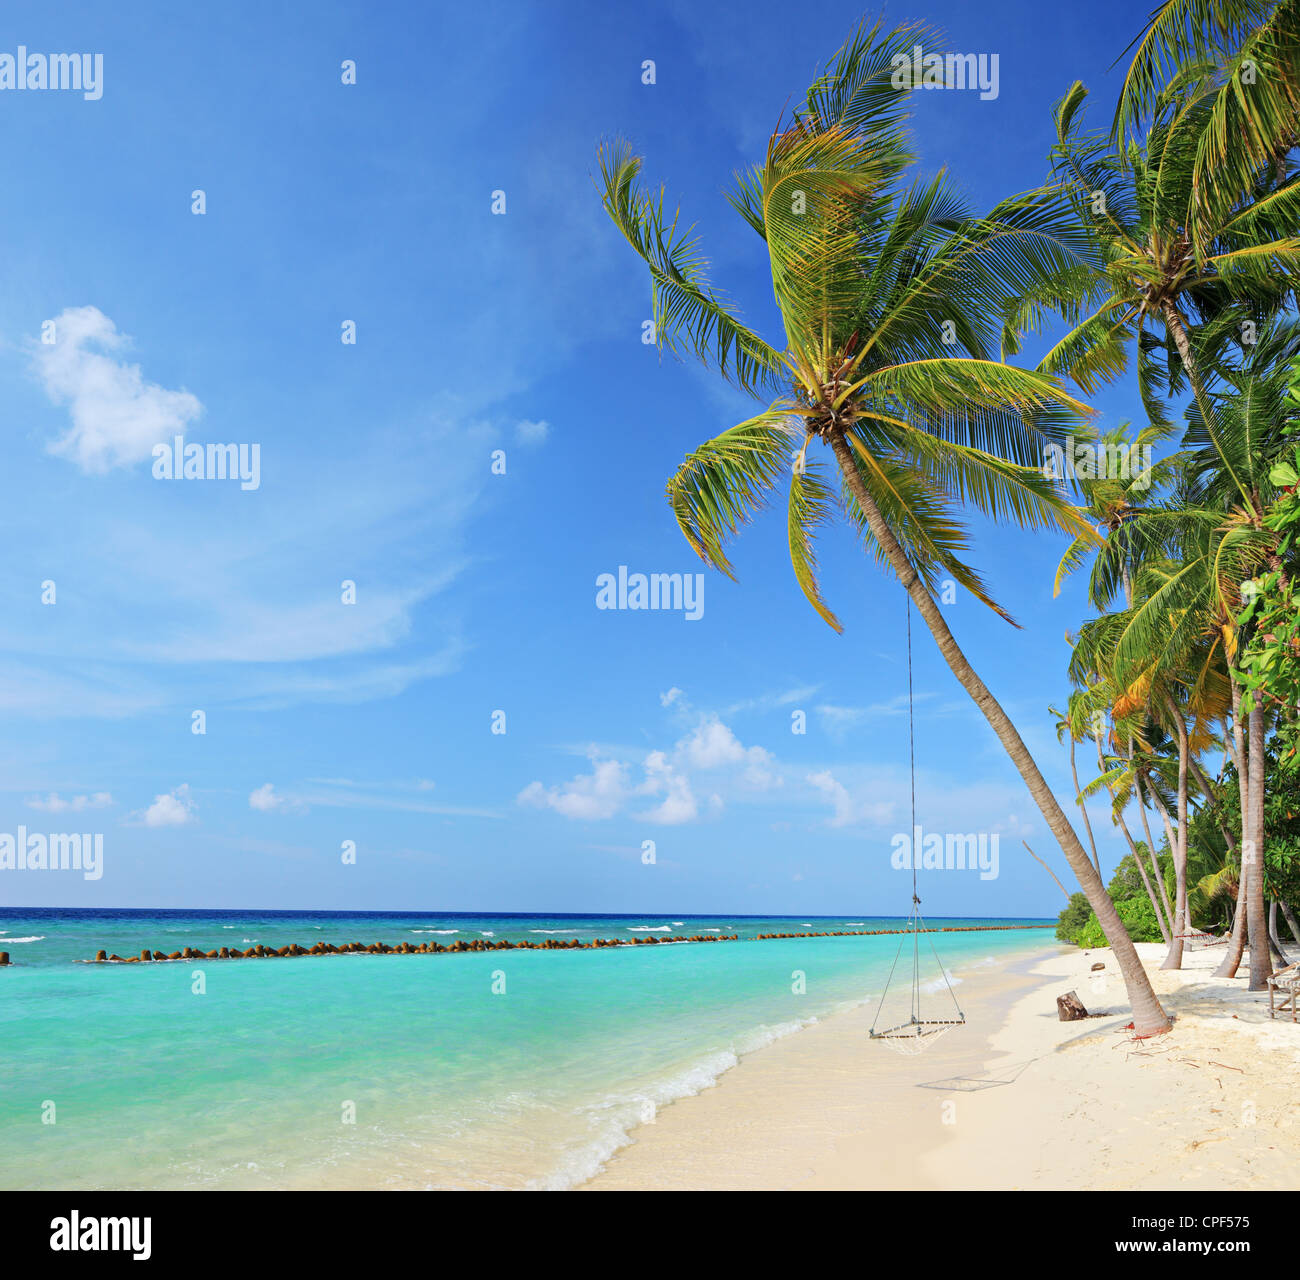 Beach scene with a swing on a palm tree on a sunny day on Kuredu island Maldives, Lhaviyani atoll Stock Photo